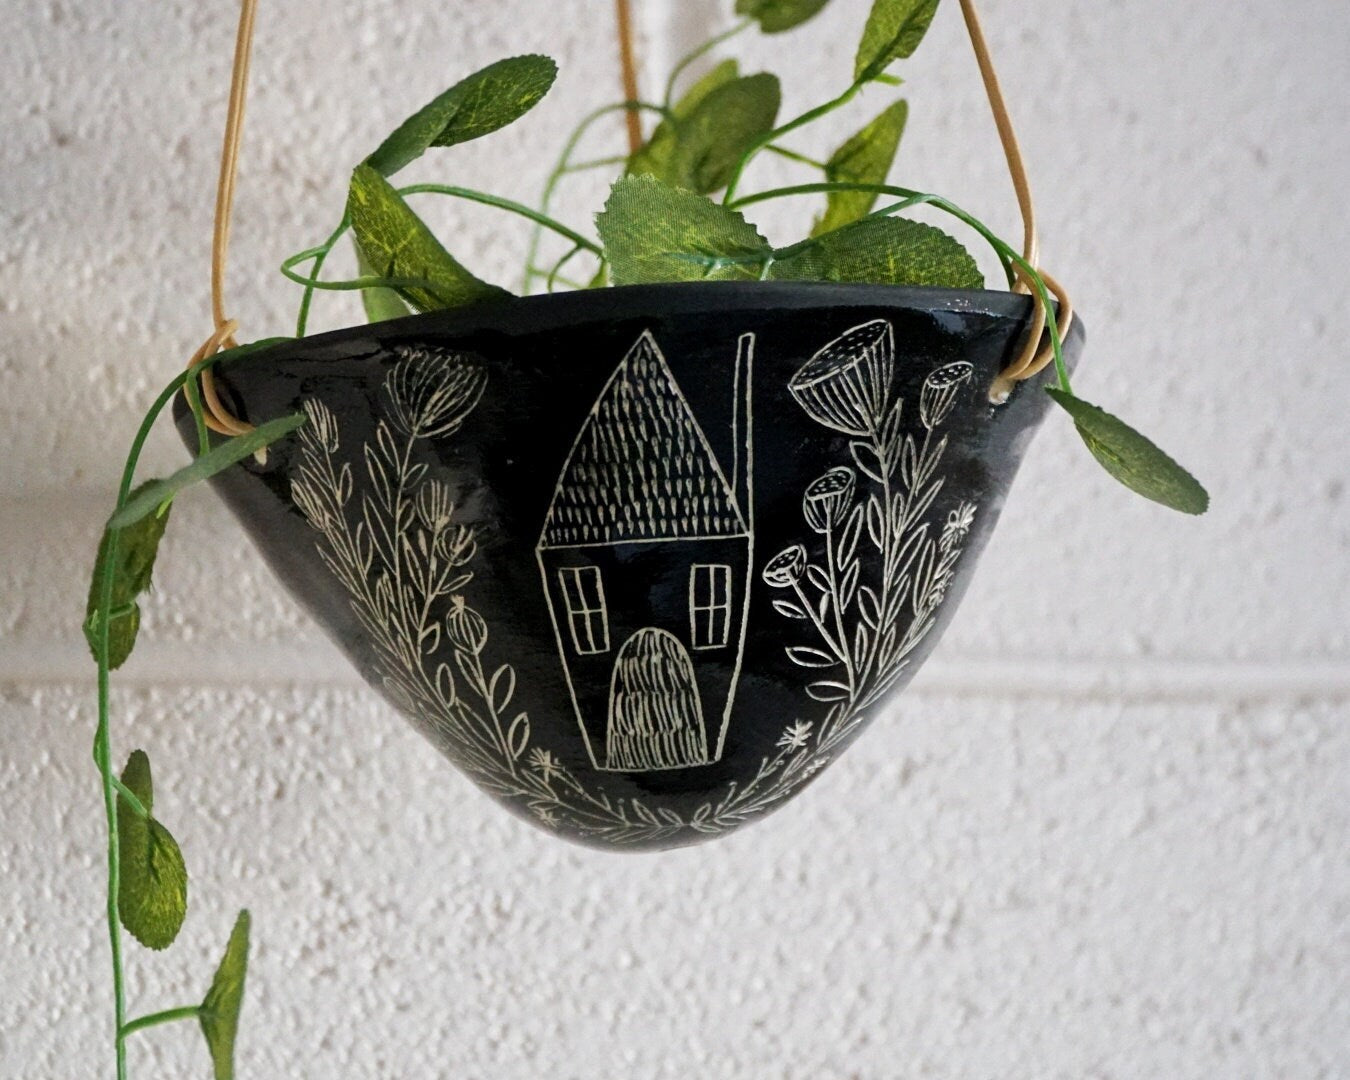 Black & White Glazed Hanging Planter w/ "Folk Home" Design - Hanging Pot with Carved Design - Glazed - Succulent, Cactus, Herb, Air Plant